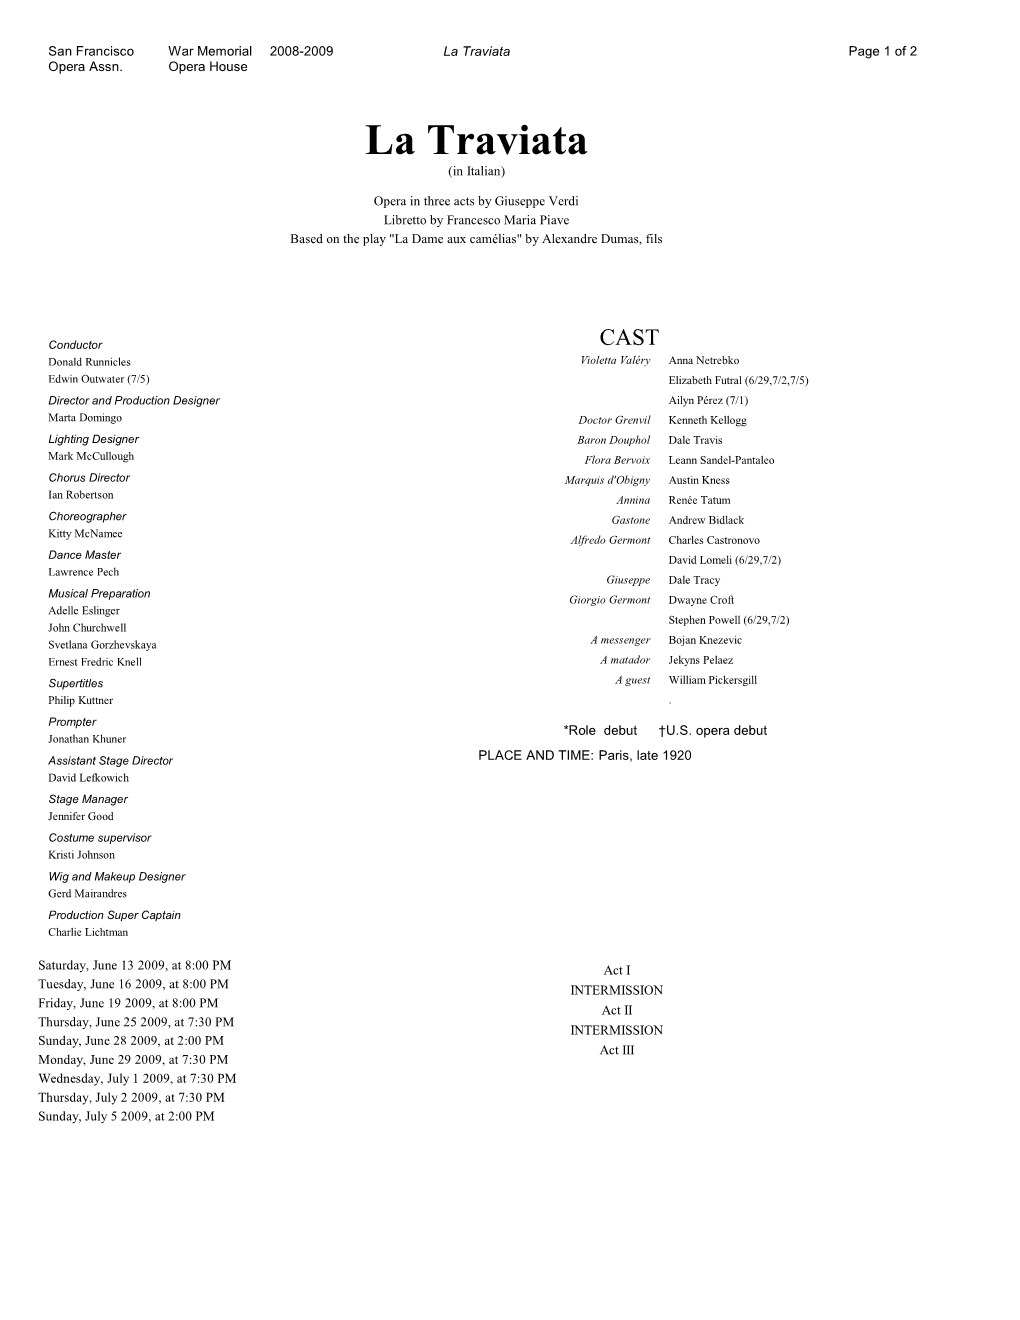 La Traviata Page 1 of 2 Opera Assn